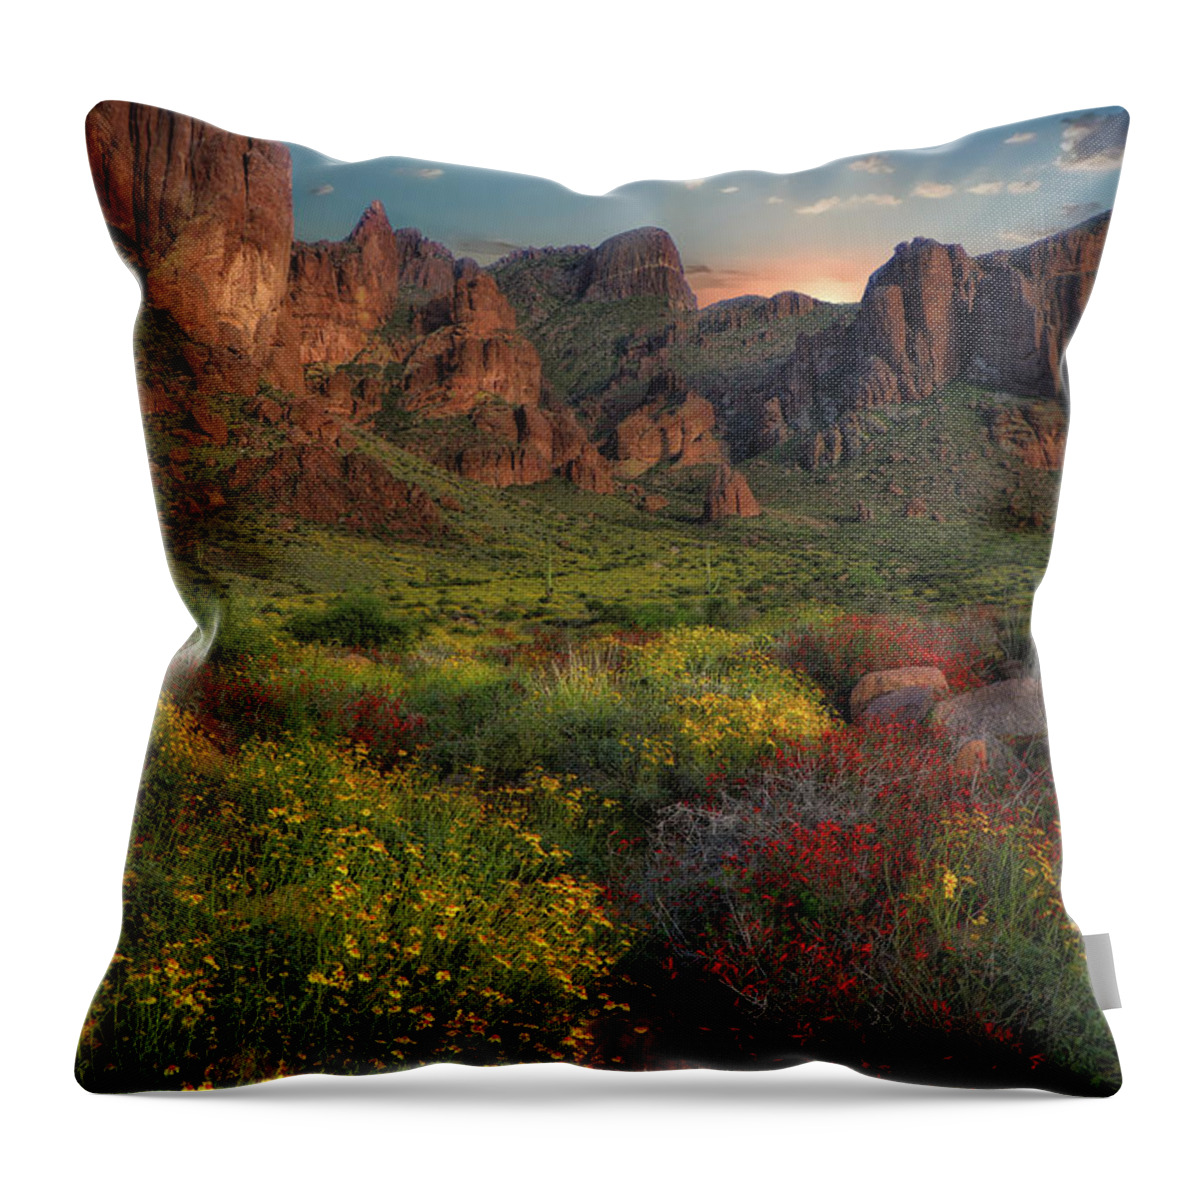 Flowers Throw Pillow featuring the photograph Sonoran Desert Springtime by Hans Brakob